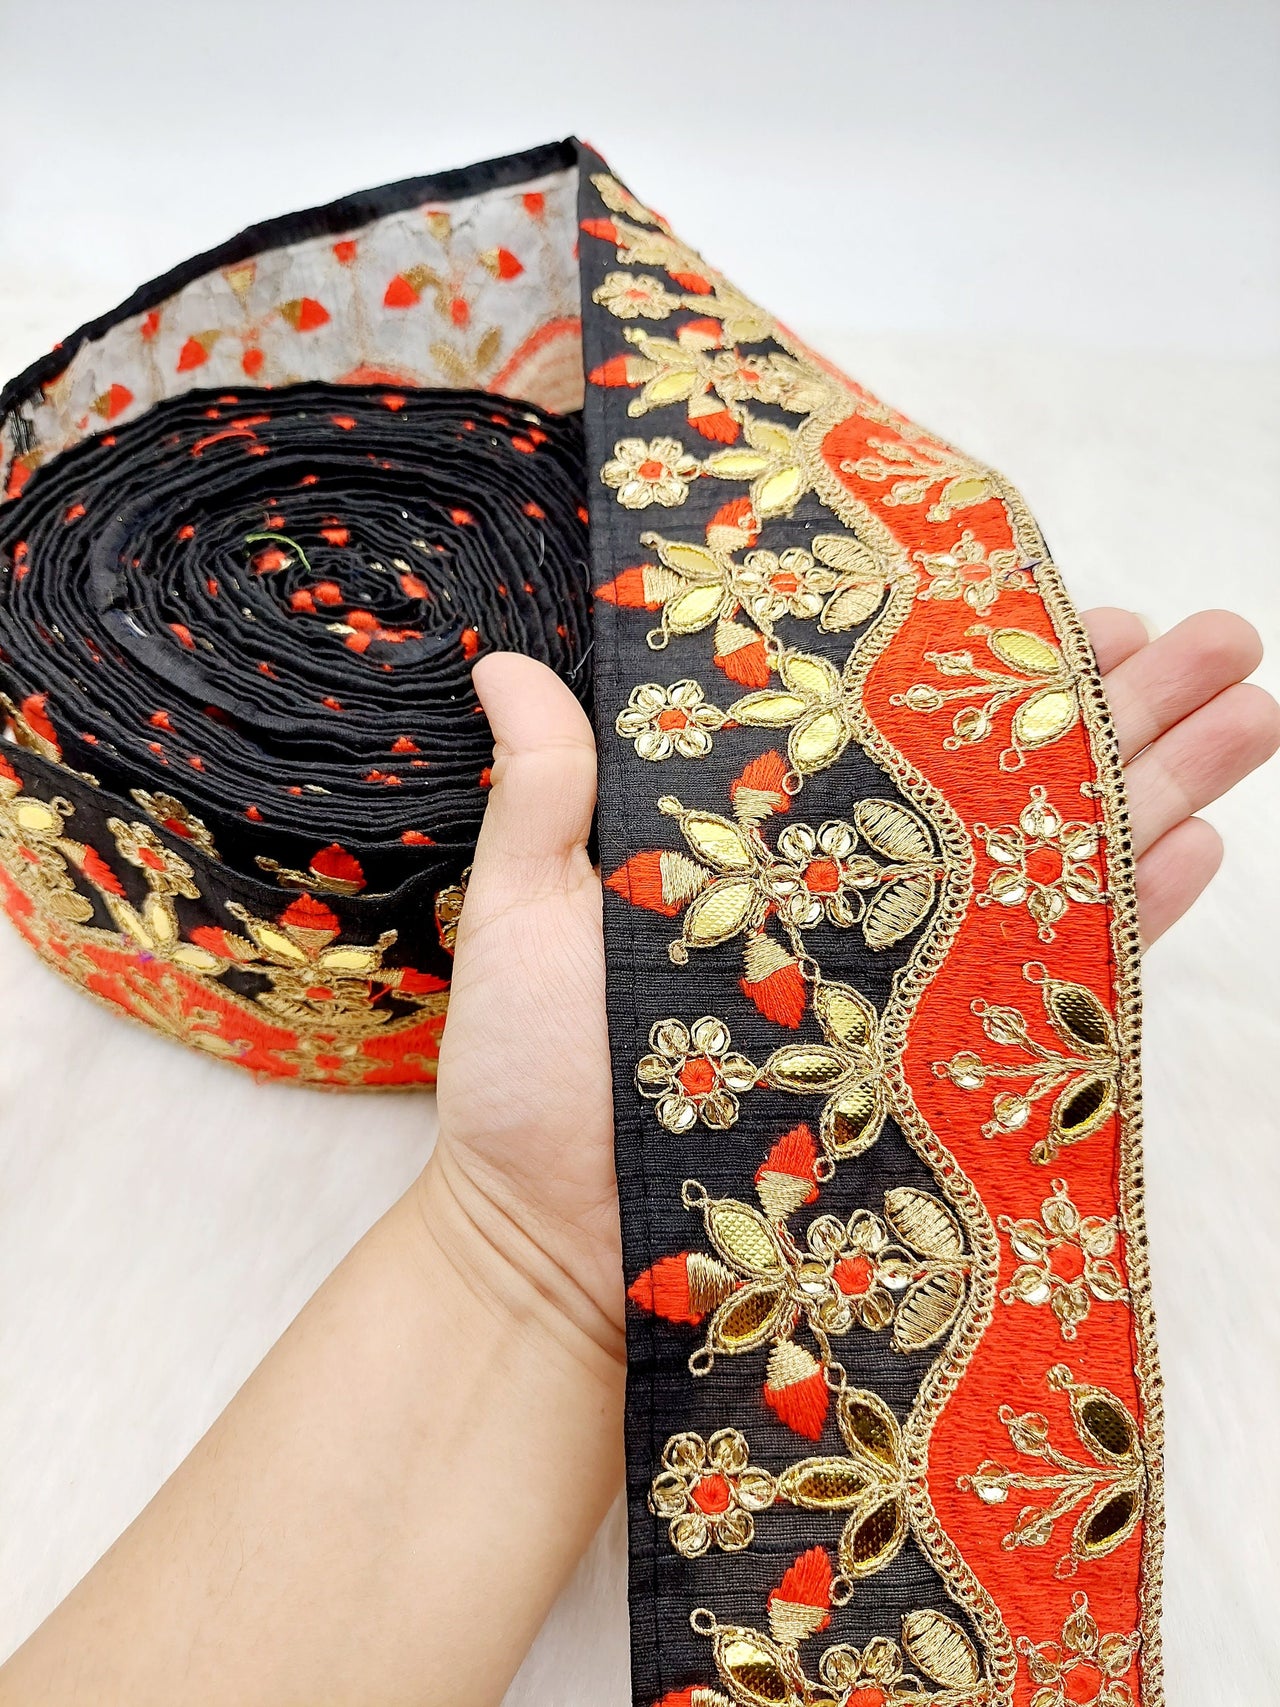 Silk Fabric Trim, Floral Embroidery Gold Gota Patti Indian Sari Border Trim By Yard Decorative Trim Craft Lace